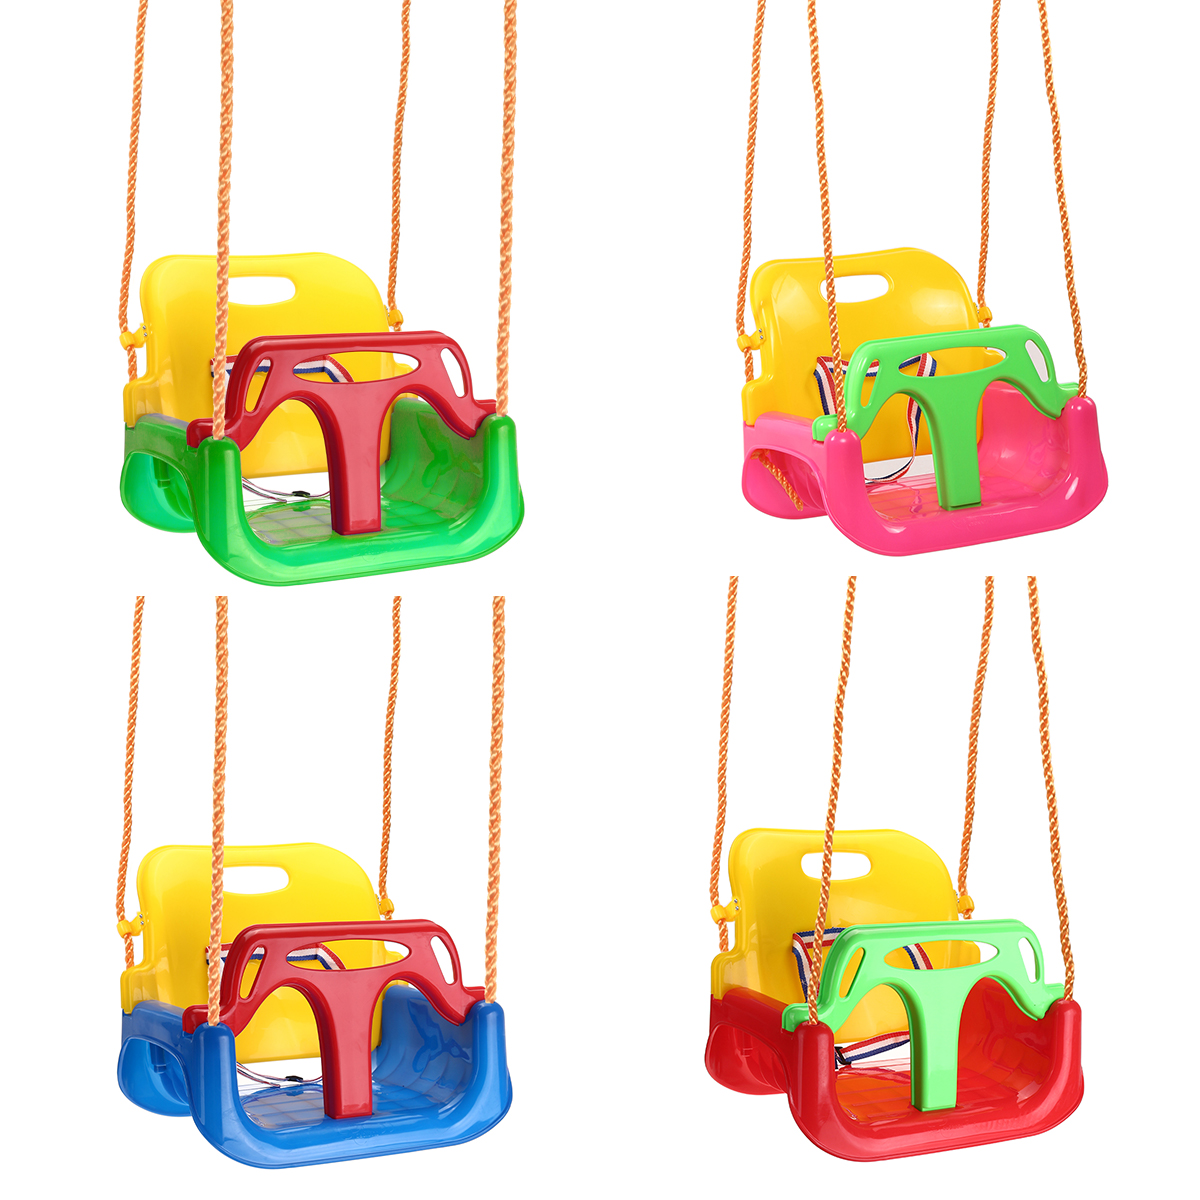 3-IN-1-Outdoor-High-Back-Toddler-Baby-Swing-Set-Children-Full-Bucket-Seat-Swing-For-Outside-Playgrou-1700530-7